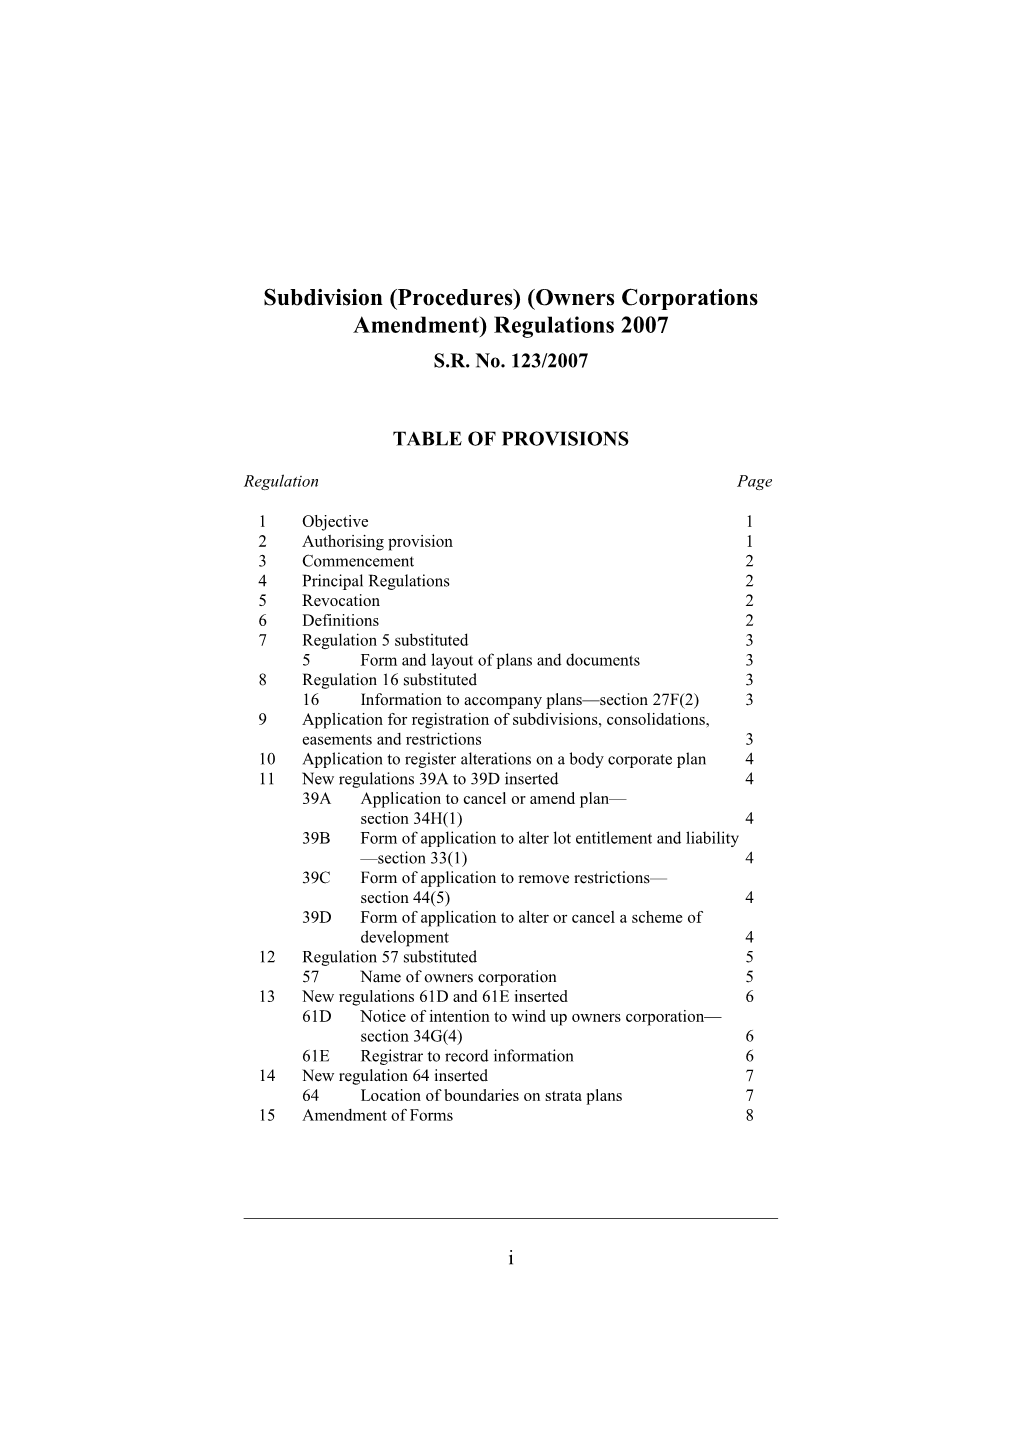 Subdivision (Procedures) (Owners Corporations Amendment) Regulations 2007